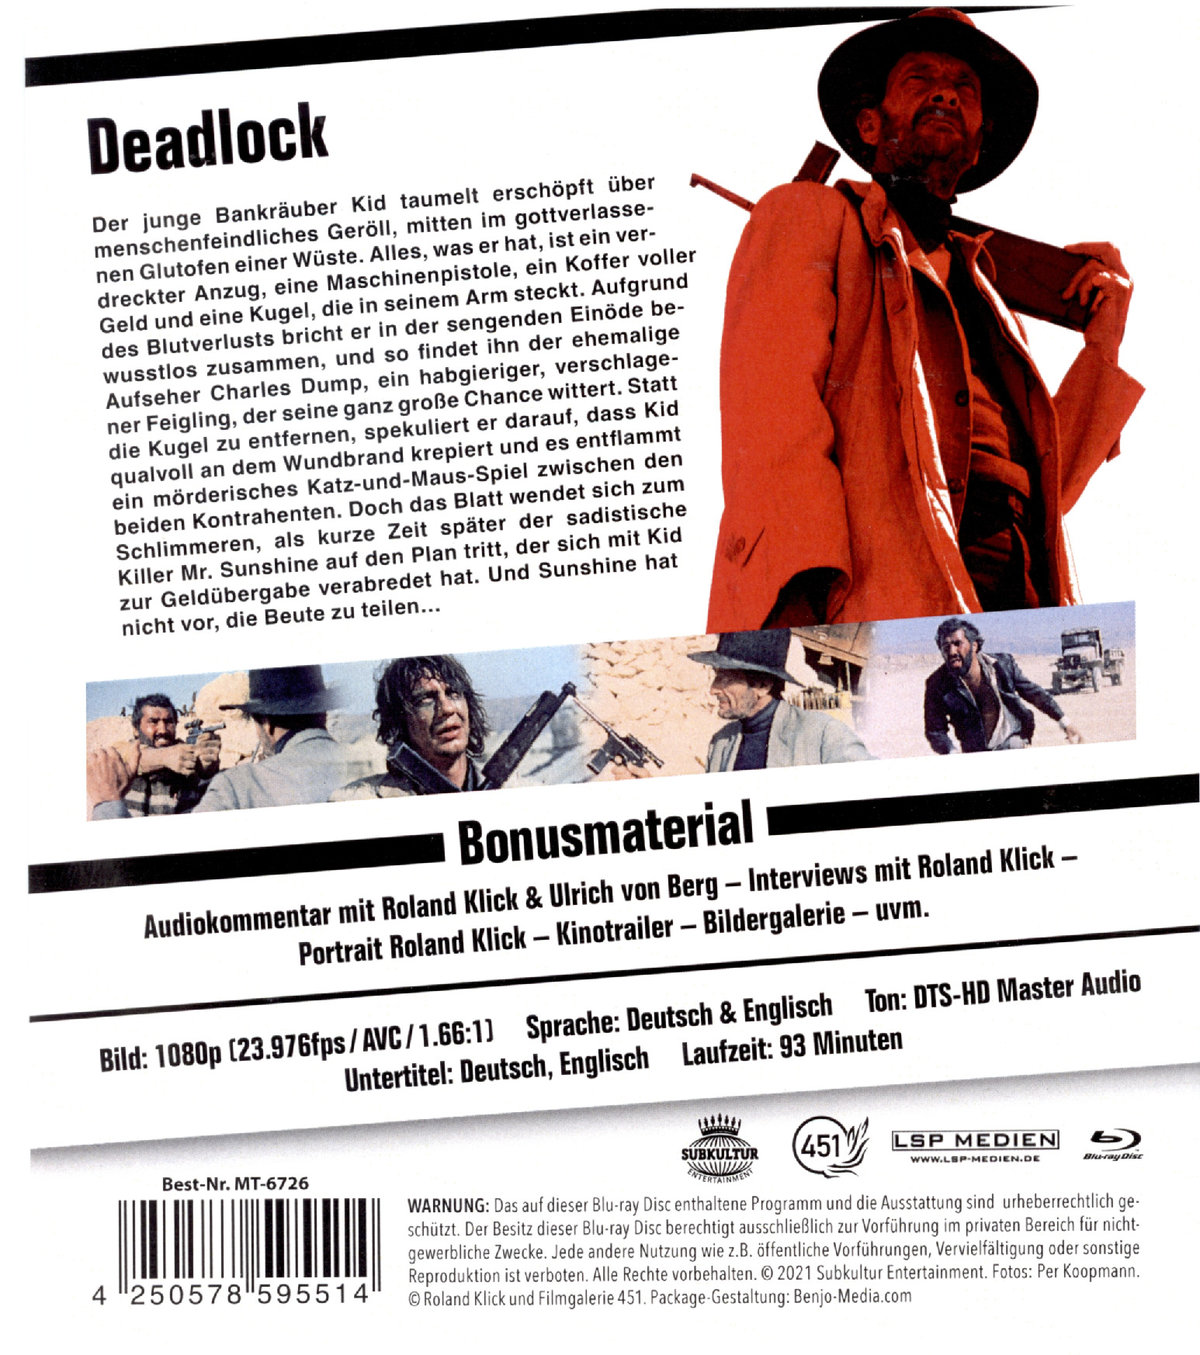 Deadlock - Uncut Edition (blu-ray)